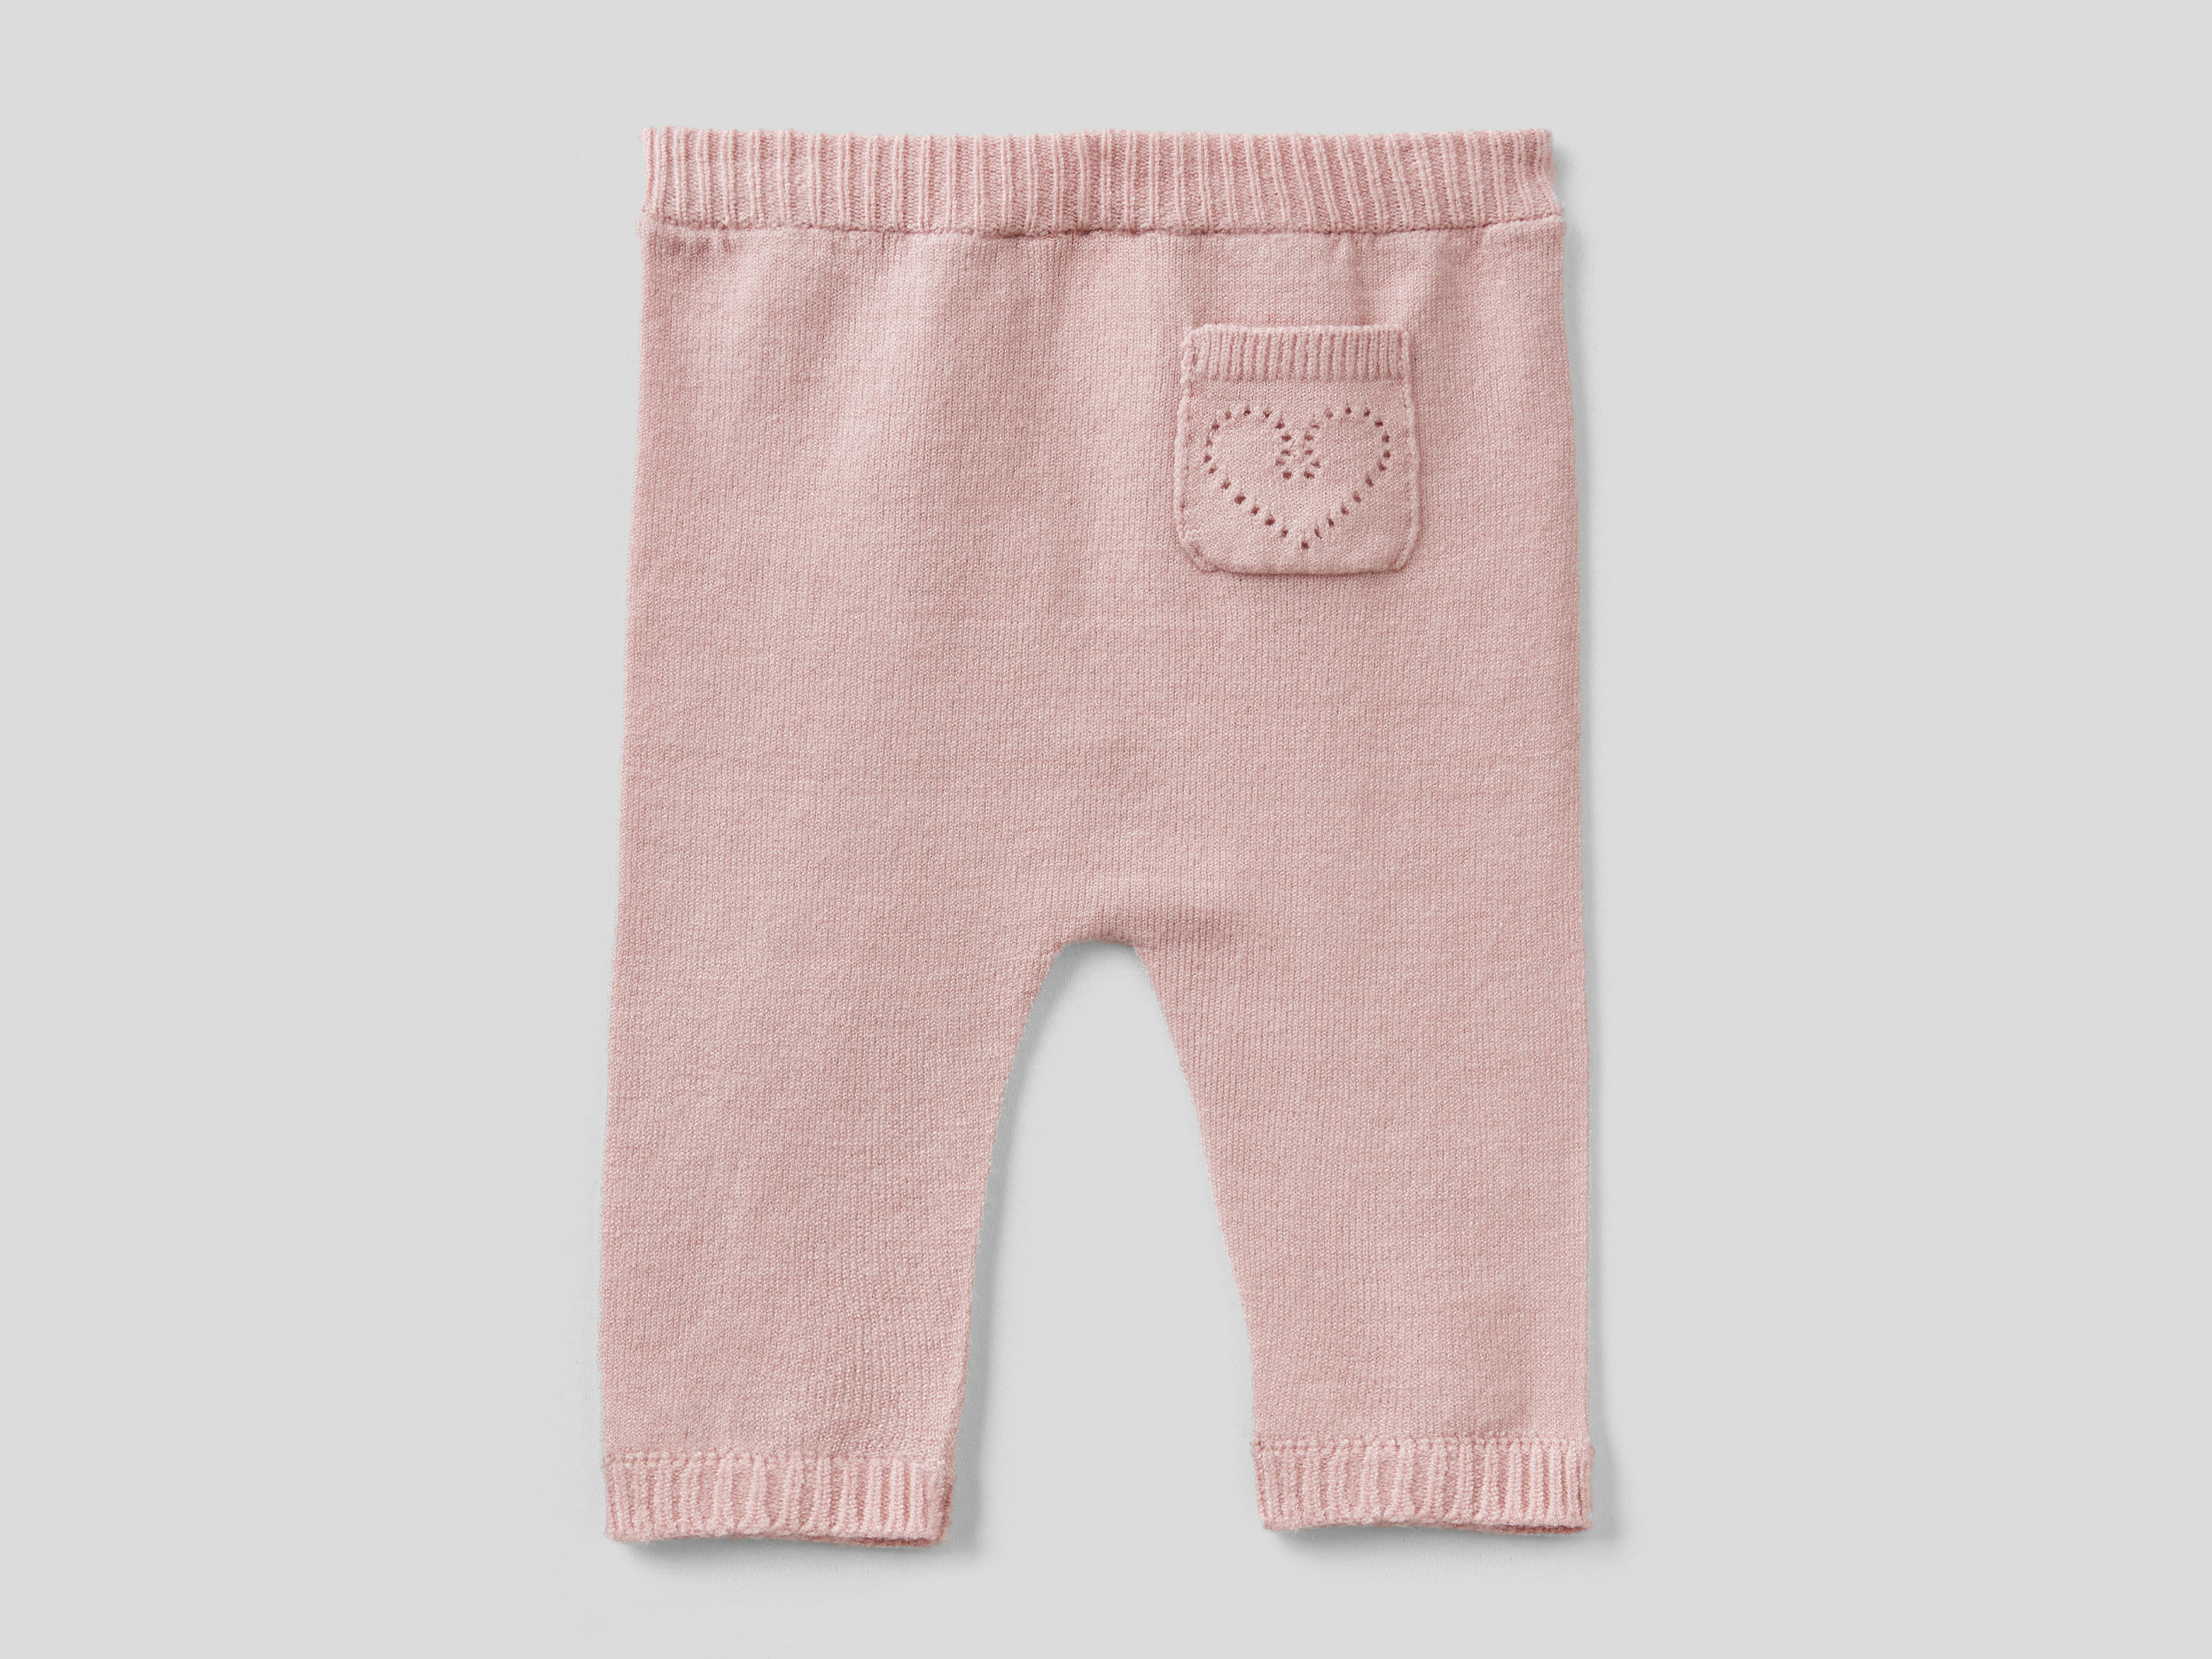 Benetton, Sweatpants With Pocket, Taglia 0-1, Pink, Kids